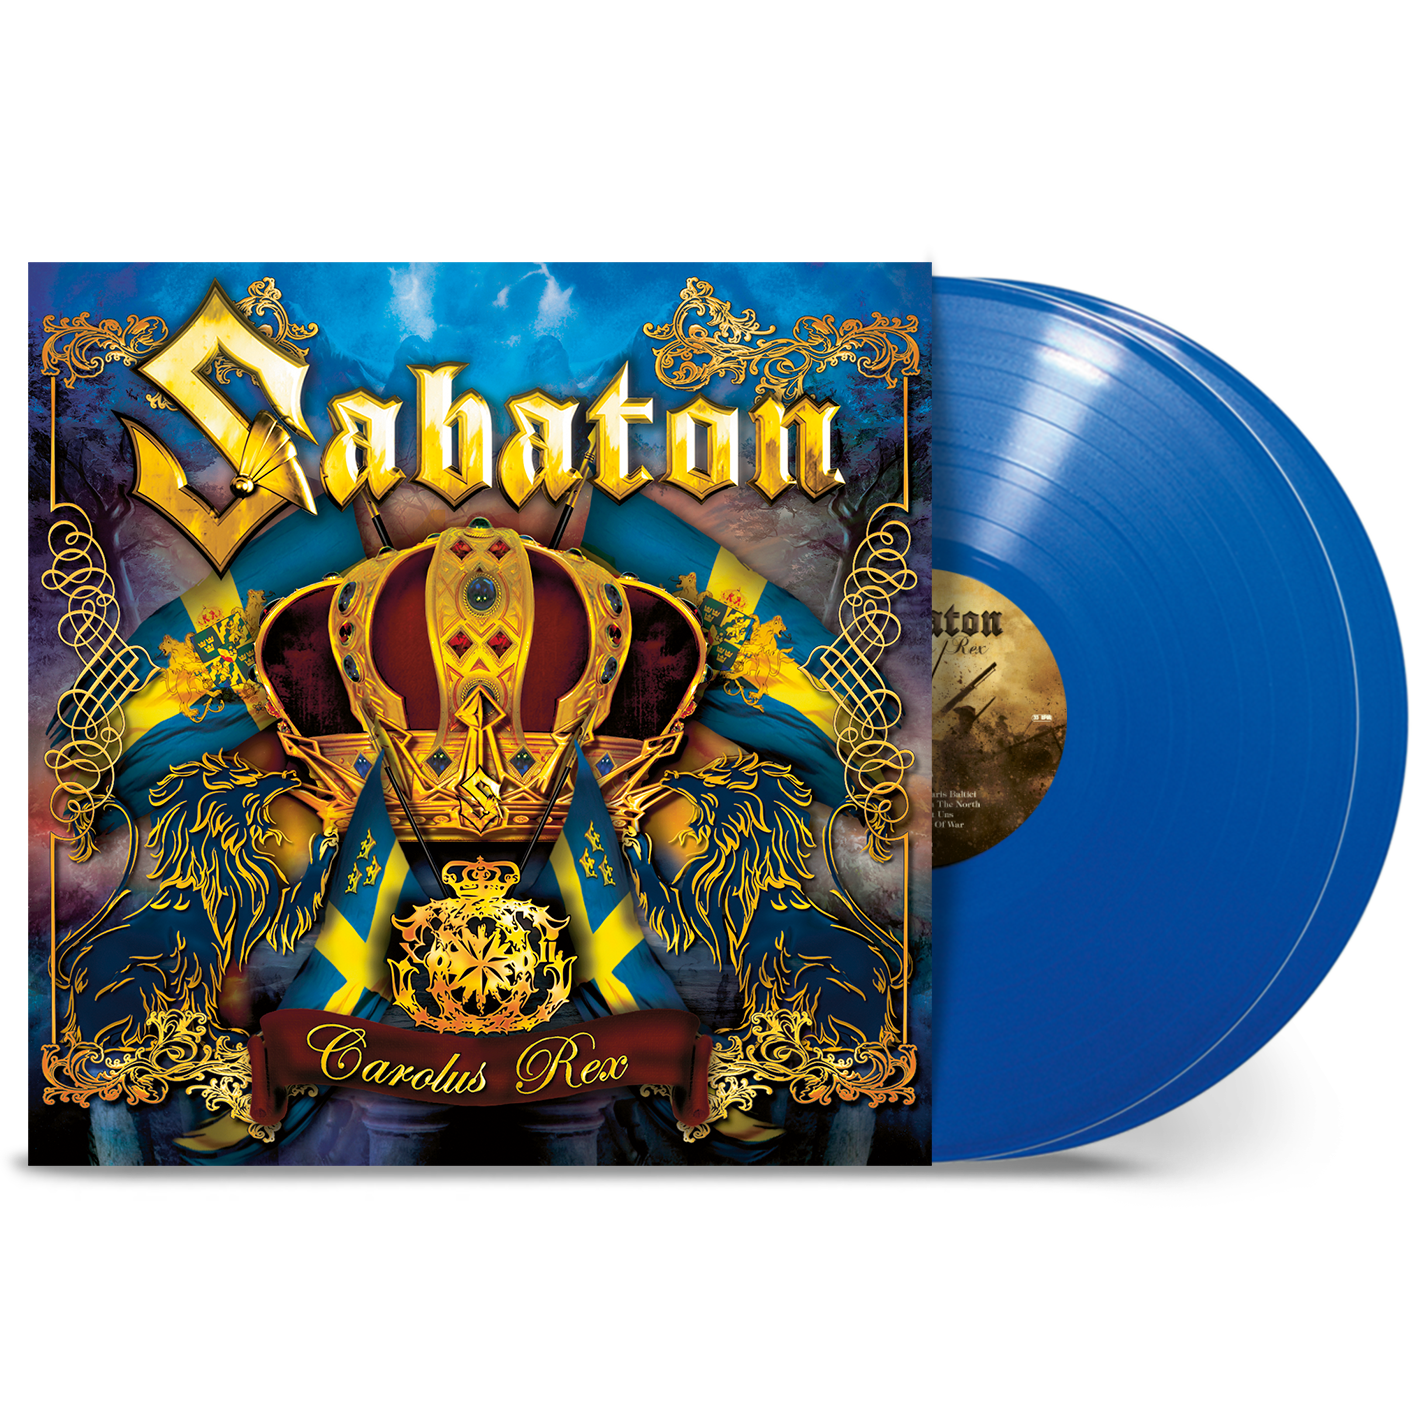 Sabaton - Carolus Rex: Limited Edition Blue Vinyl 2LP